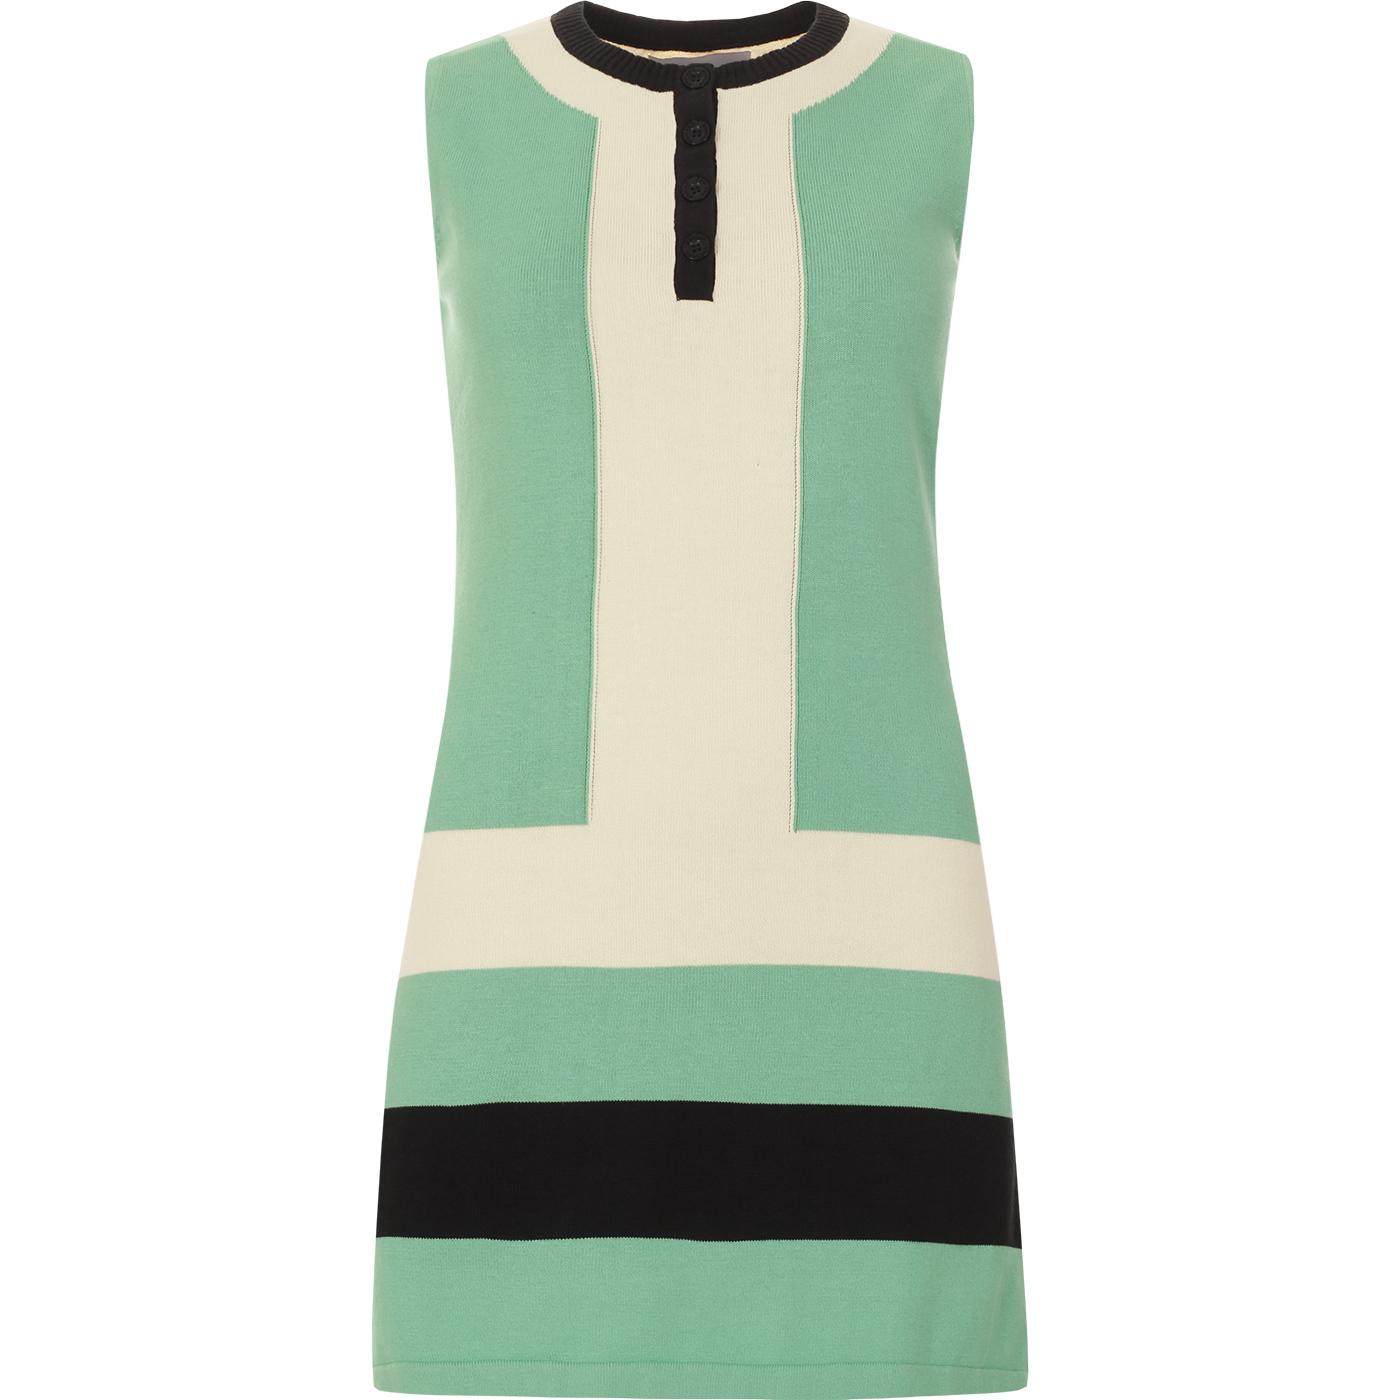 Lantana MADCAP ENGLAND 1960s Mod Knitted Dress K